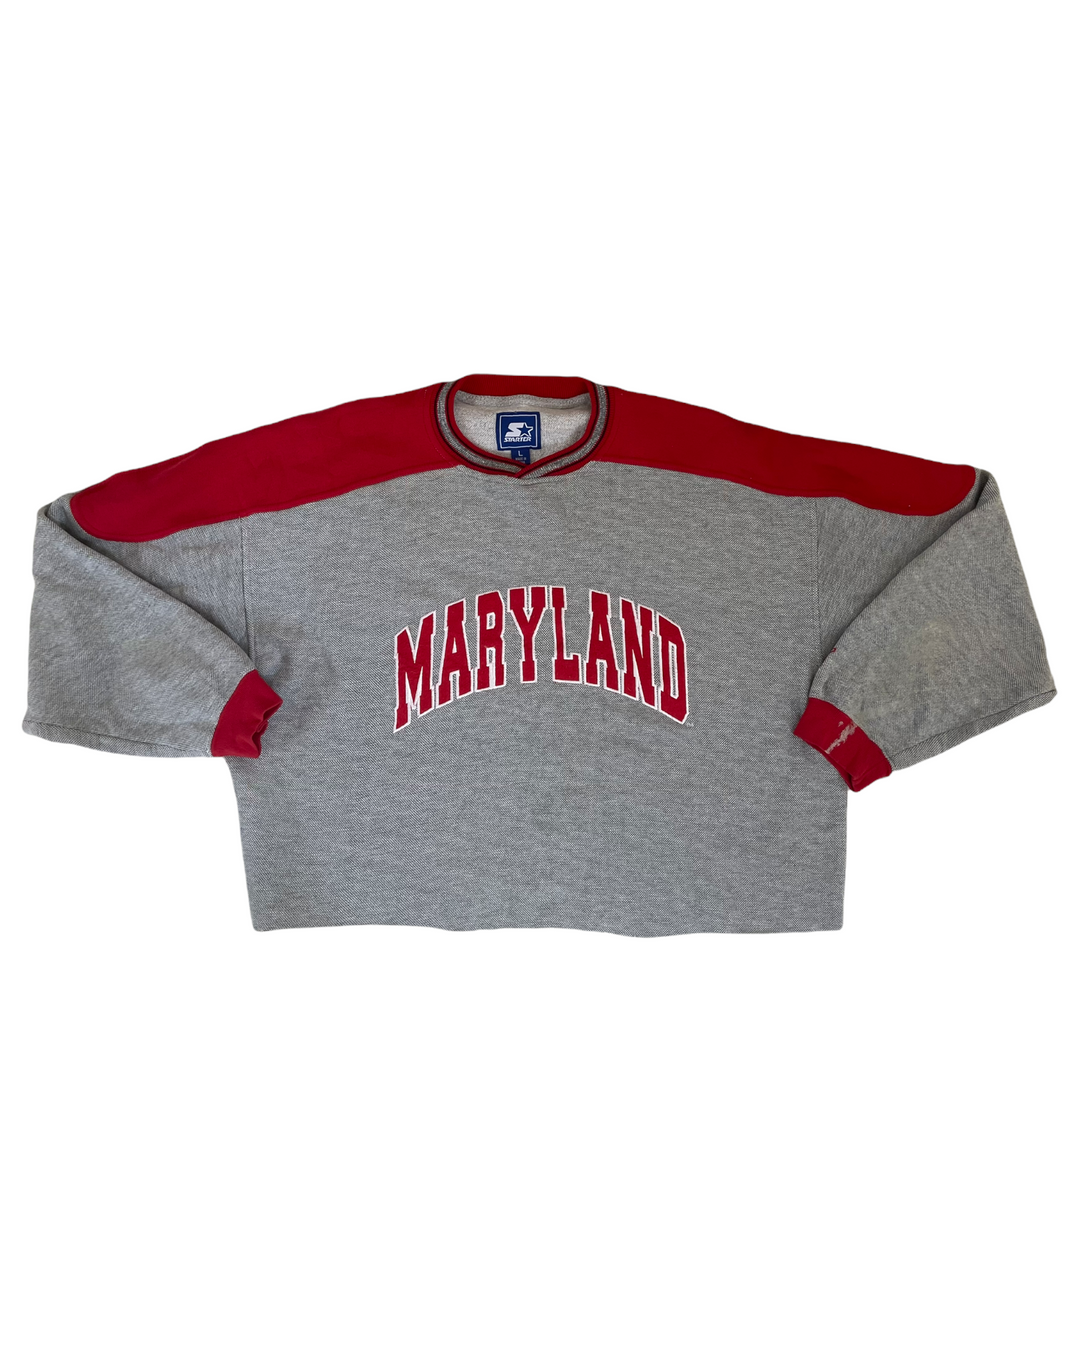 Maryland Vintage Cropped Sweatshirt